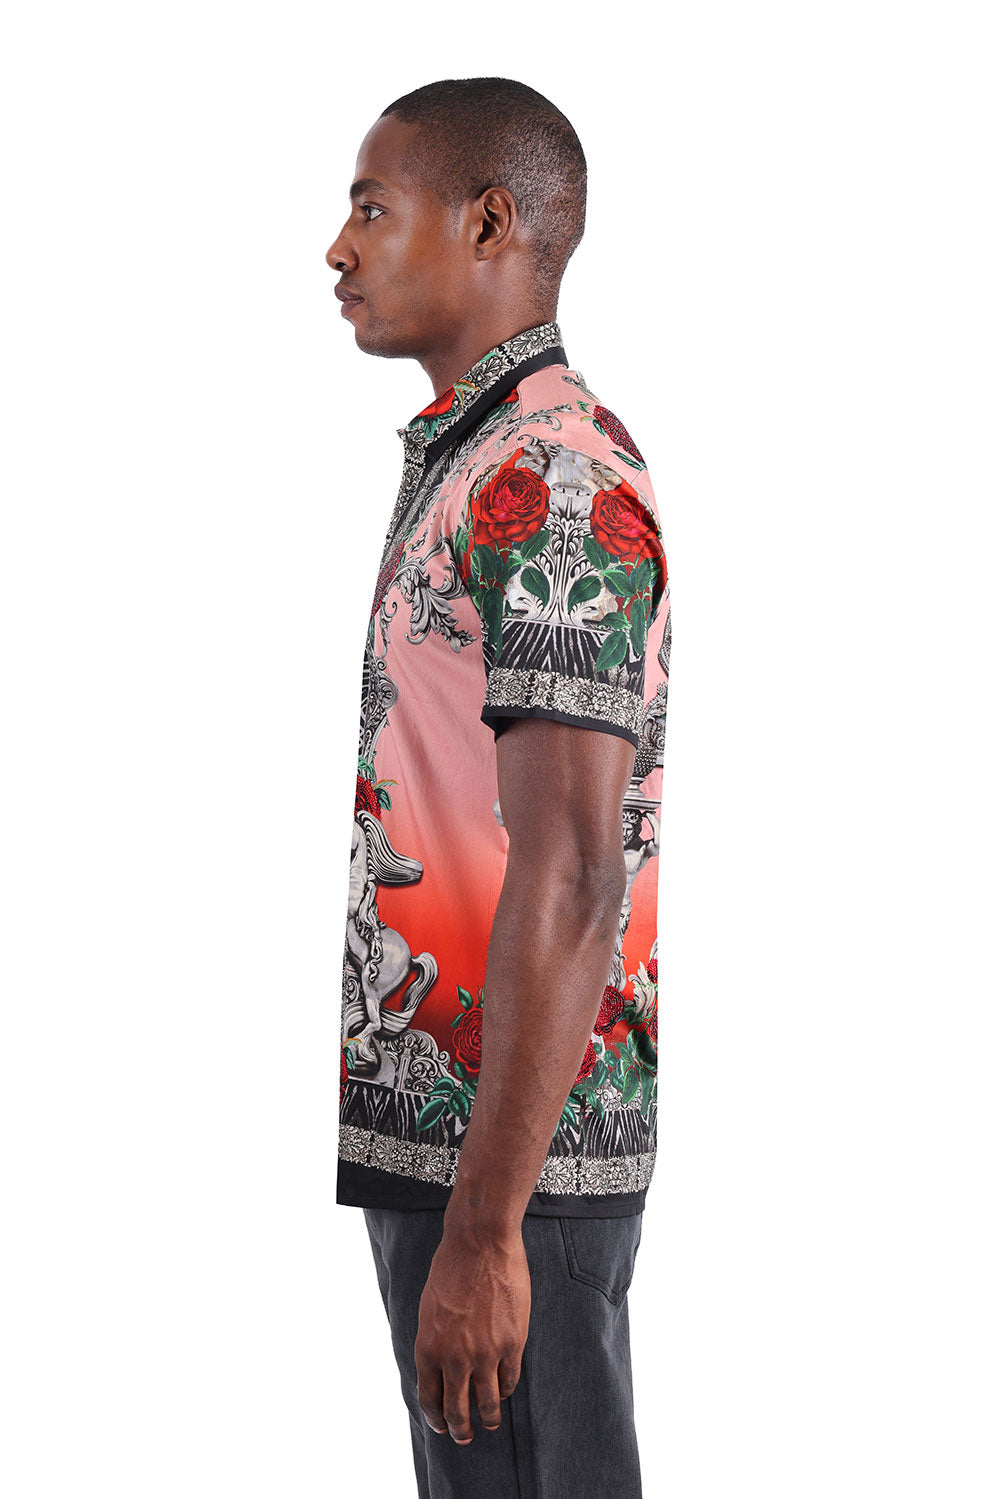 BARABAS Men's Leopard and Rhinestone Floral Short Sleeve Shirts 3SR418 Pink